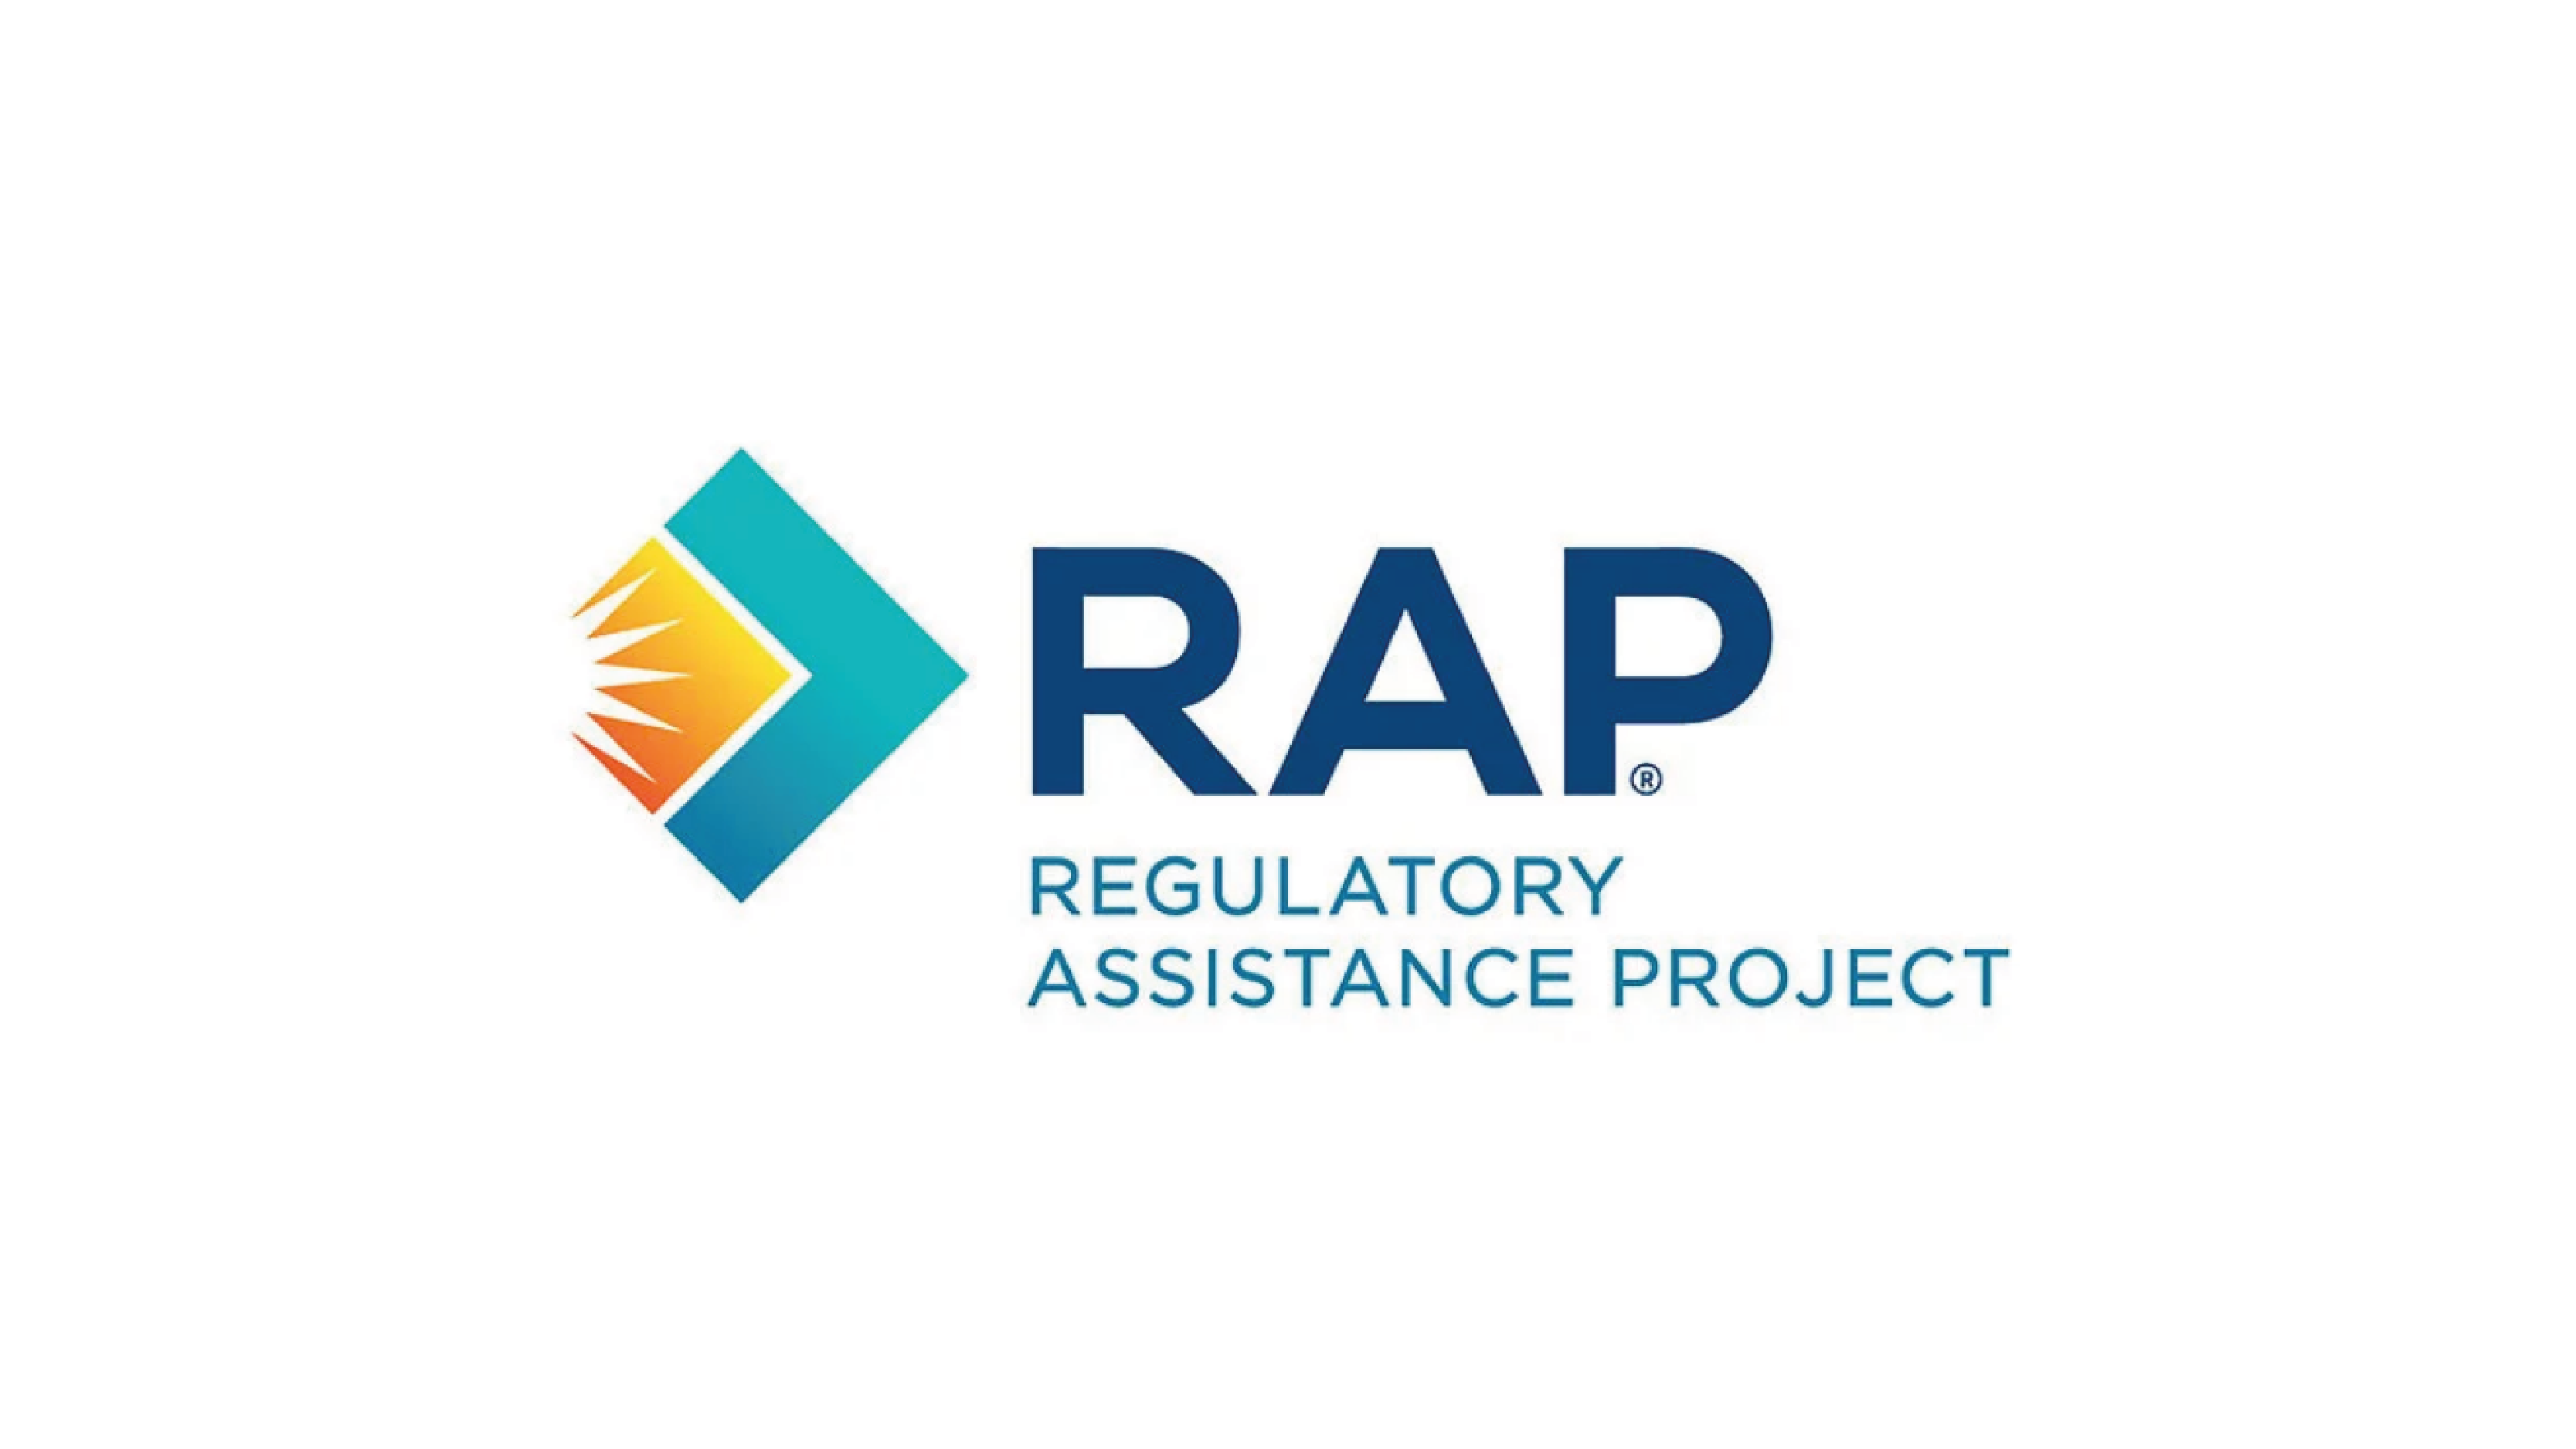 The Regulatory Assistance Project (RAP)